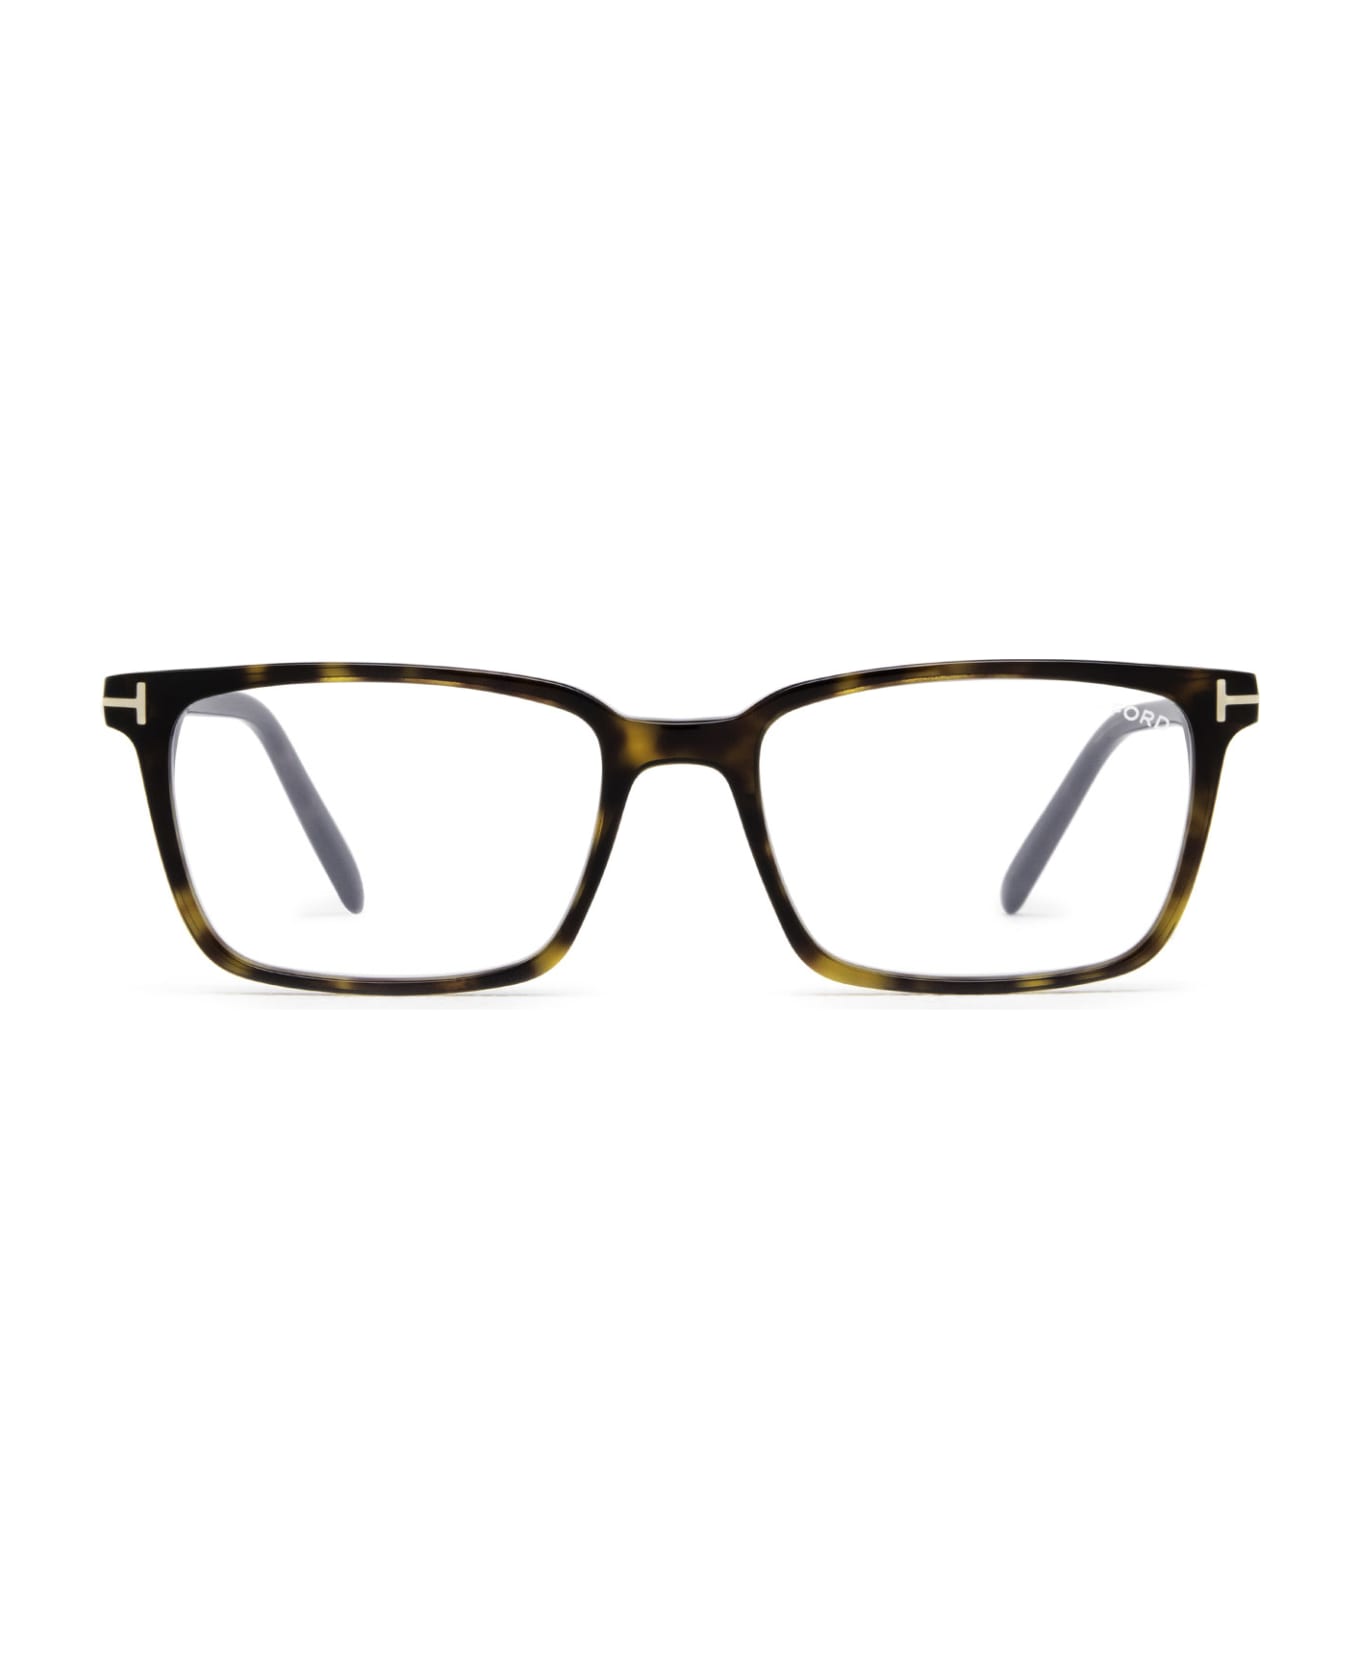 Tom Ford Eyewear Ft5802-b Dark Havana Glasses - Dark Havana アイウェア